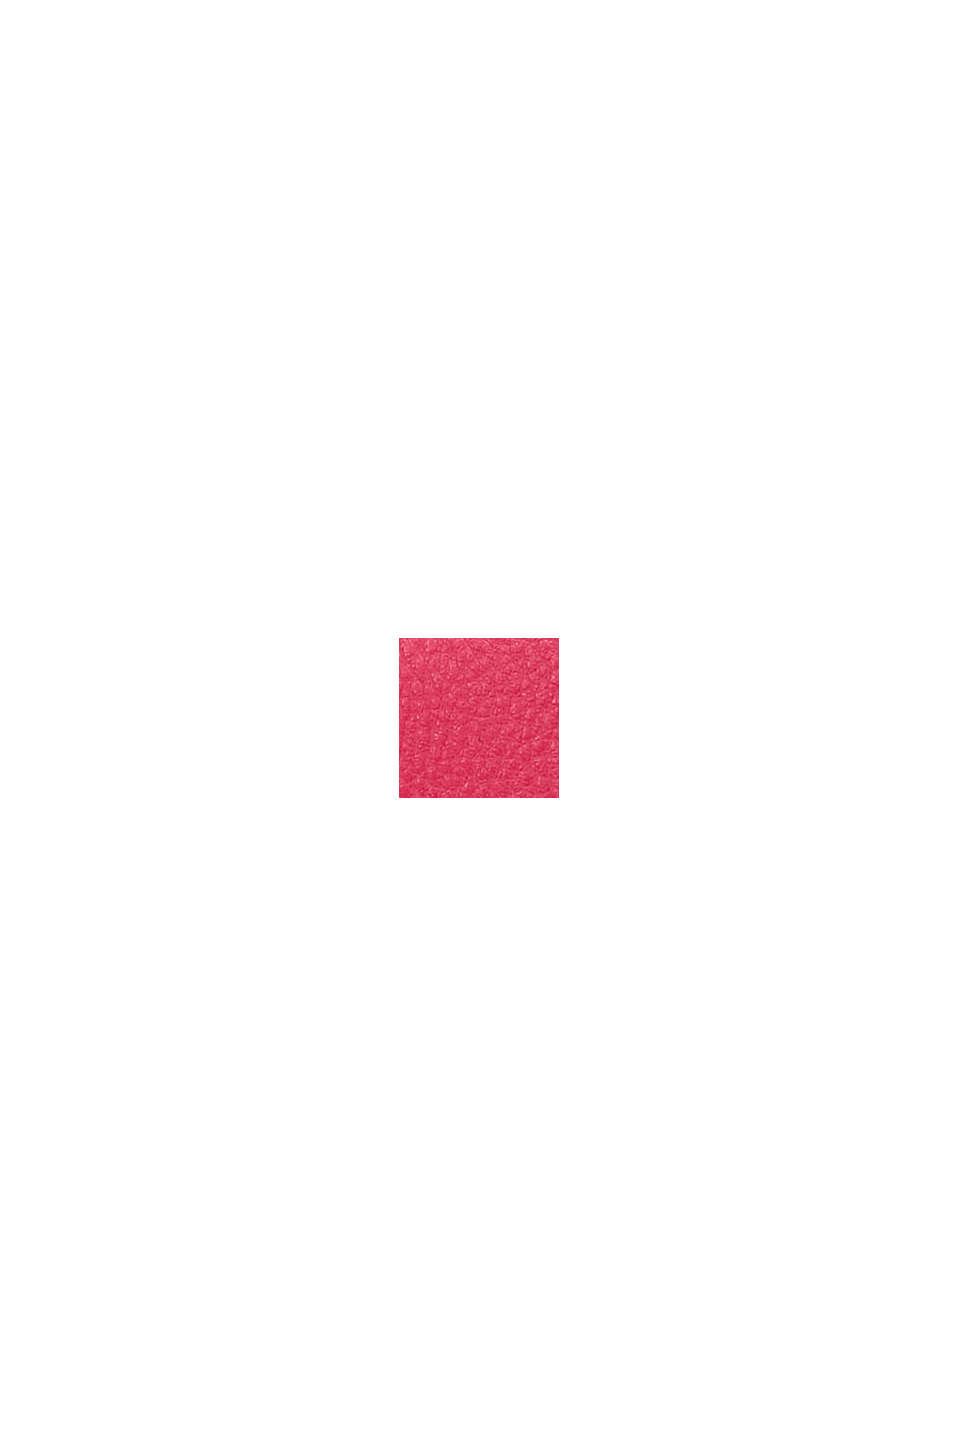 Végane : le sac au design colour blocking, PINK FUCHSIA, swatch